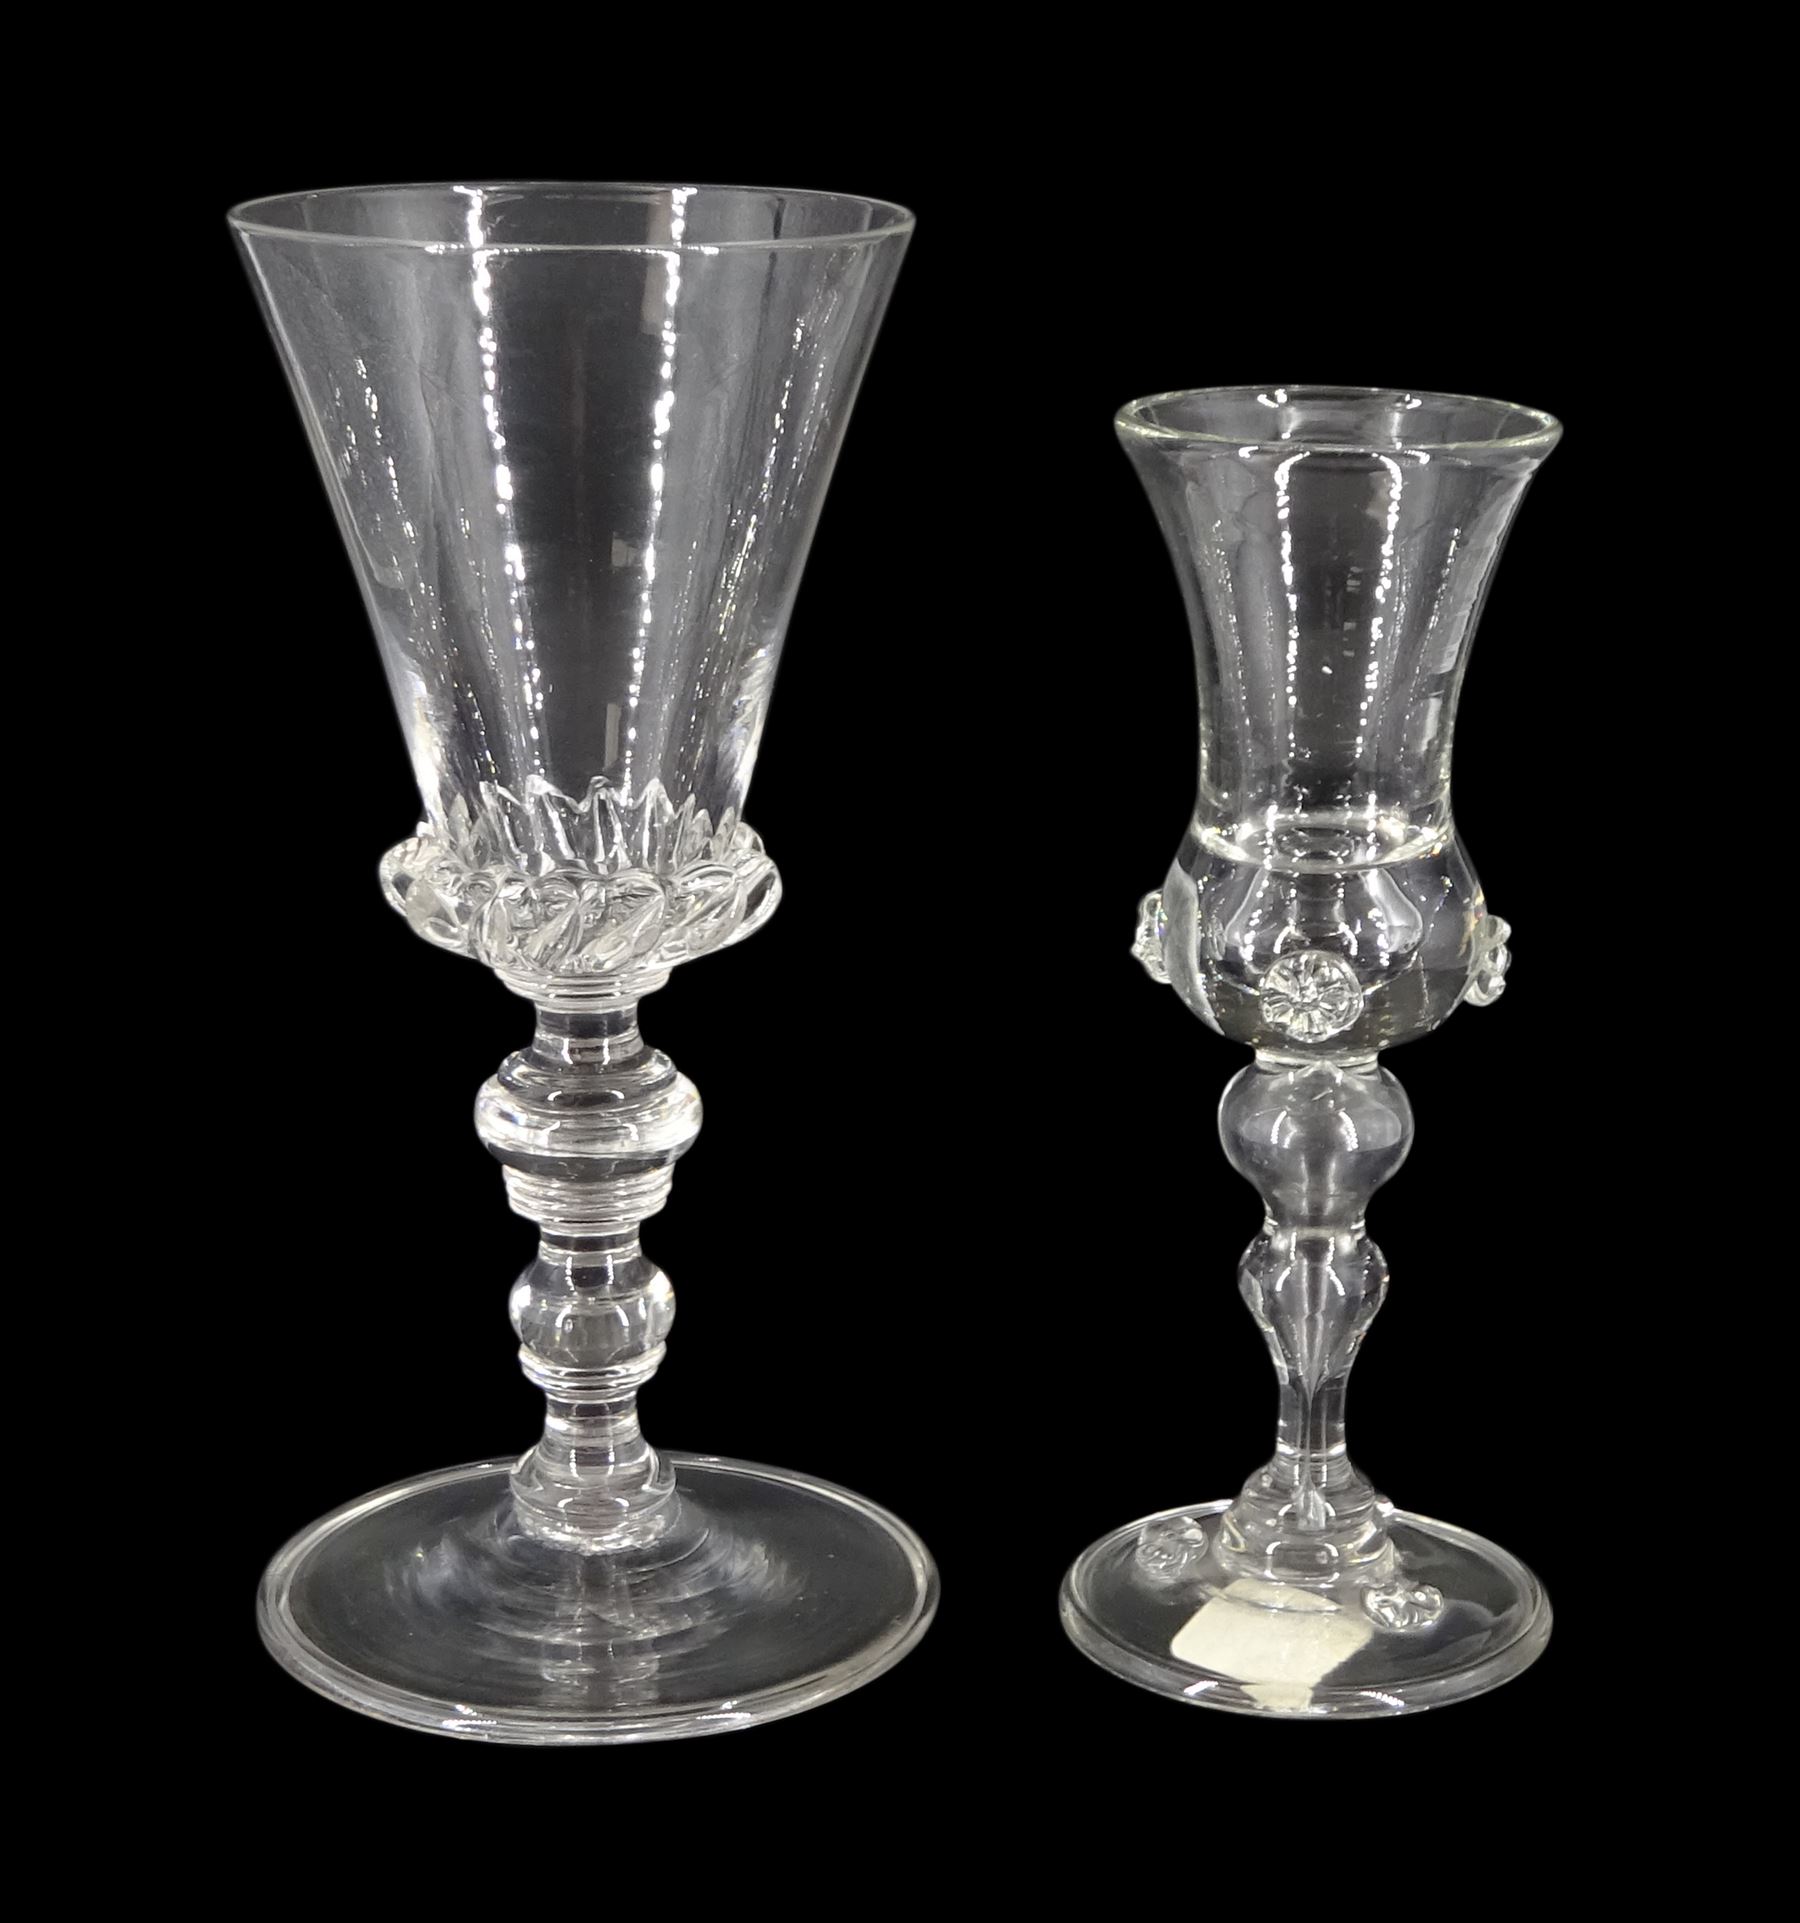 19th century drinking glass